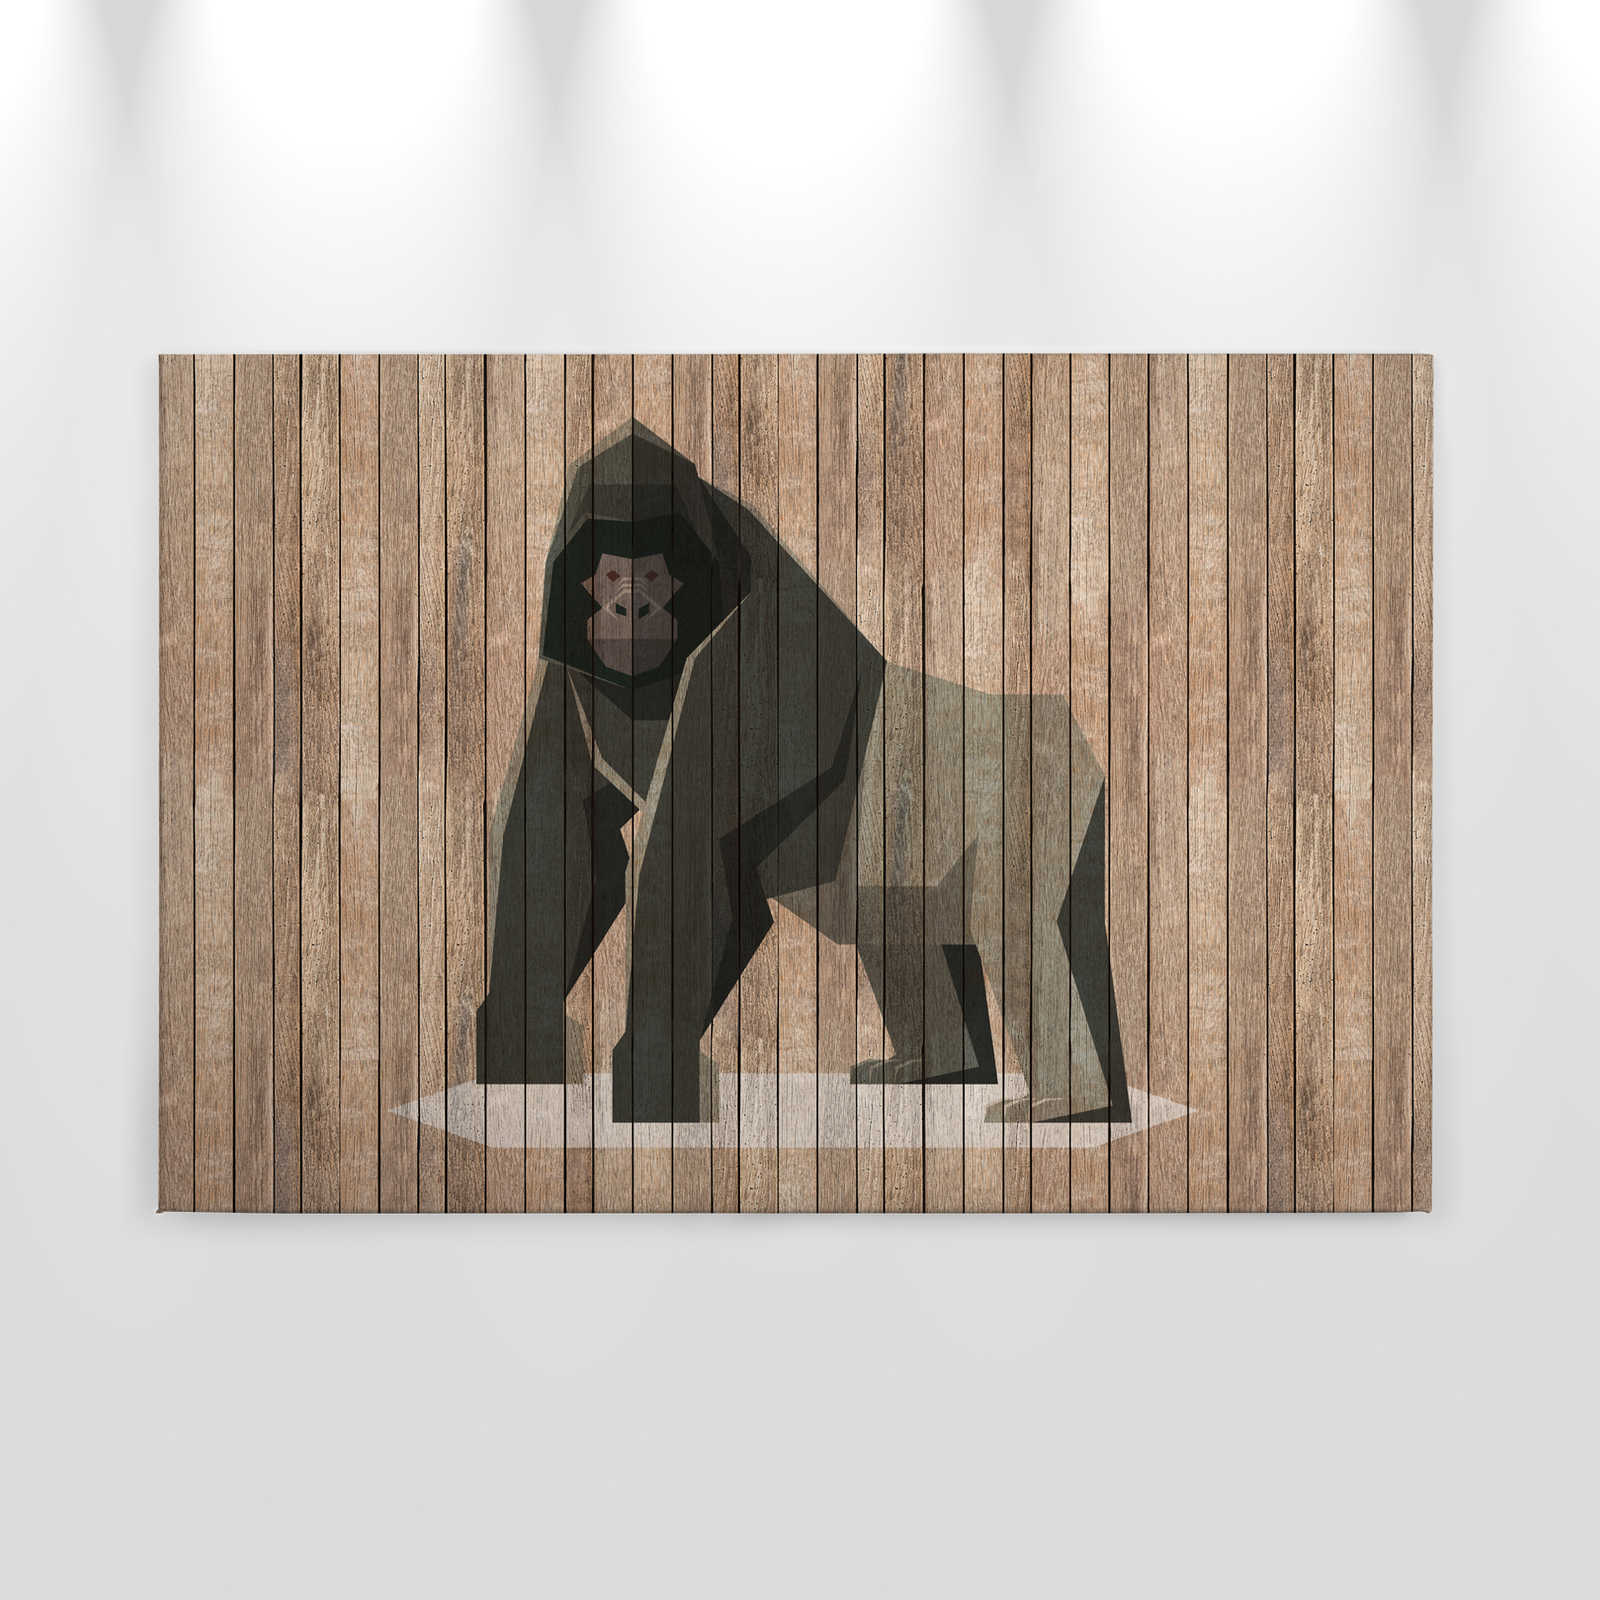             Born to Be Wild 3 - Cuadro Gorila sobre tabla pared - Paneles de madera Ancho - 0.90 m x 0.60 m
        